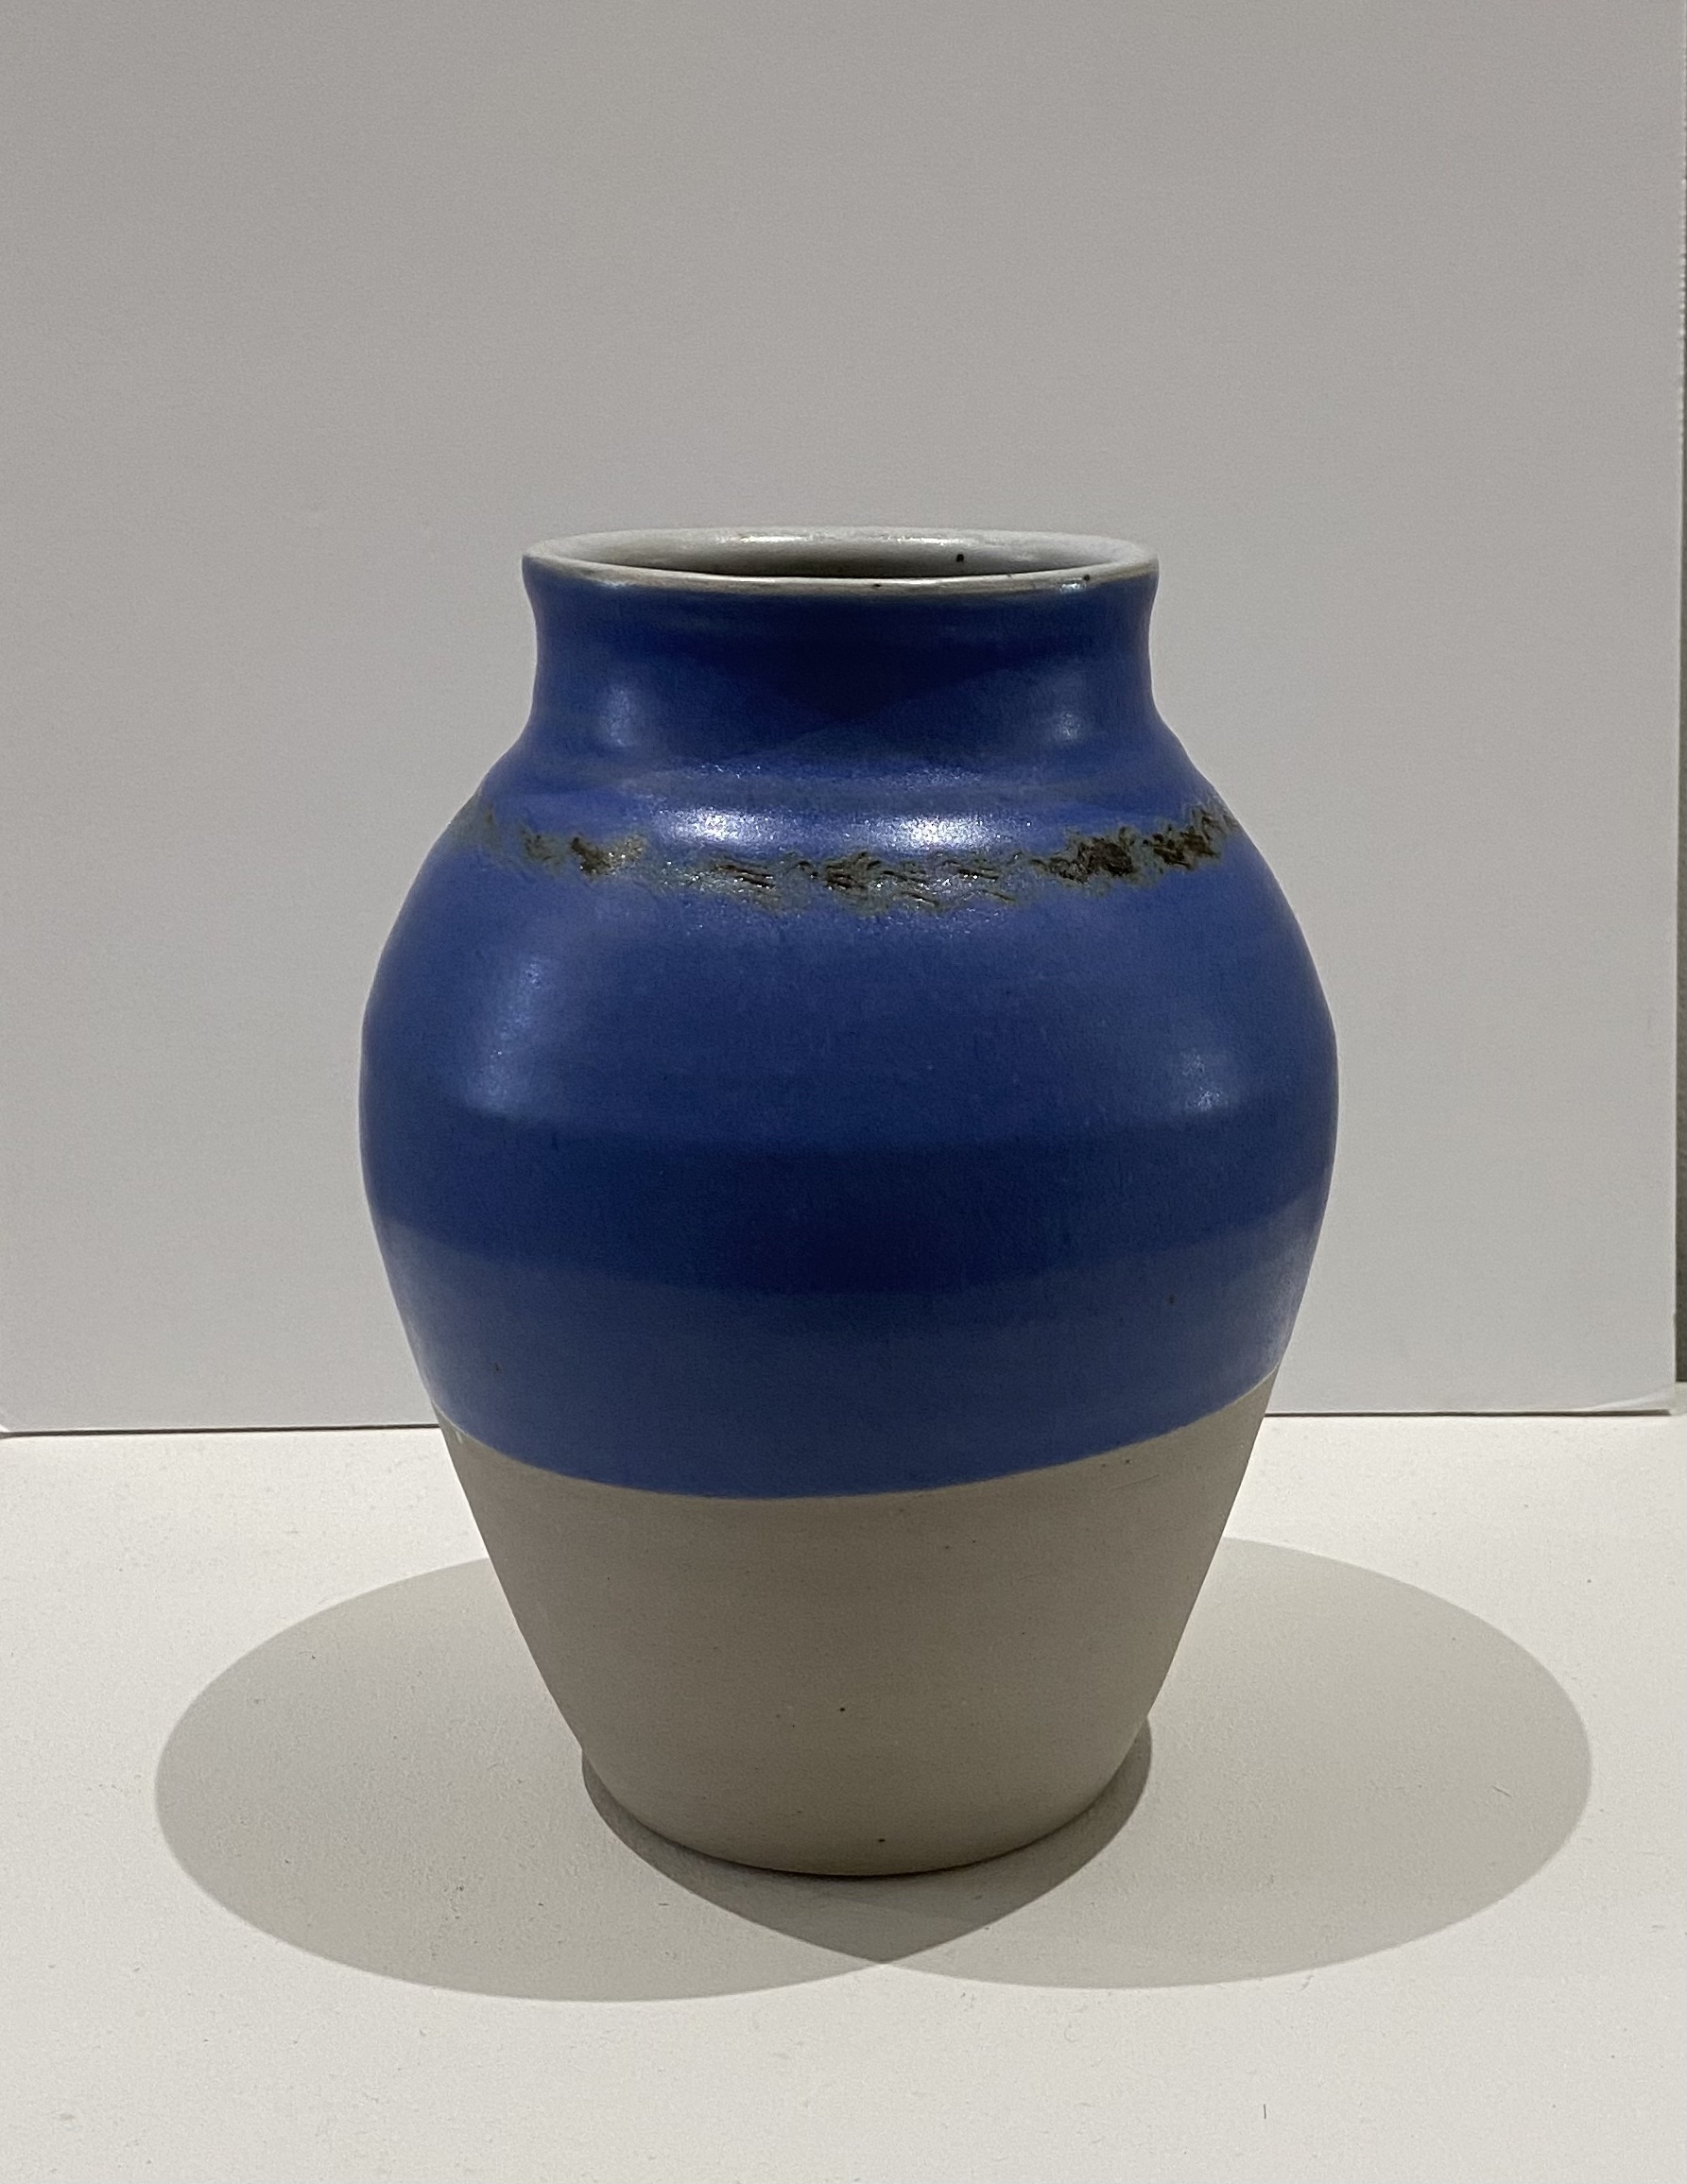 Vase
gas-fired ceramic
8.25"
$50.